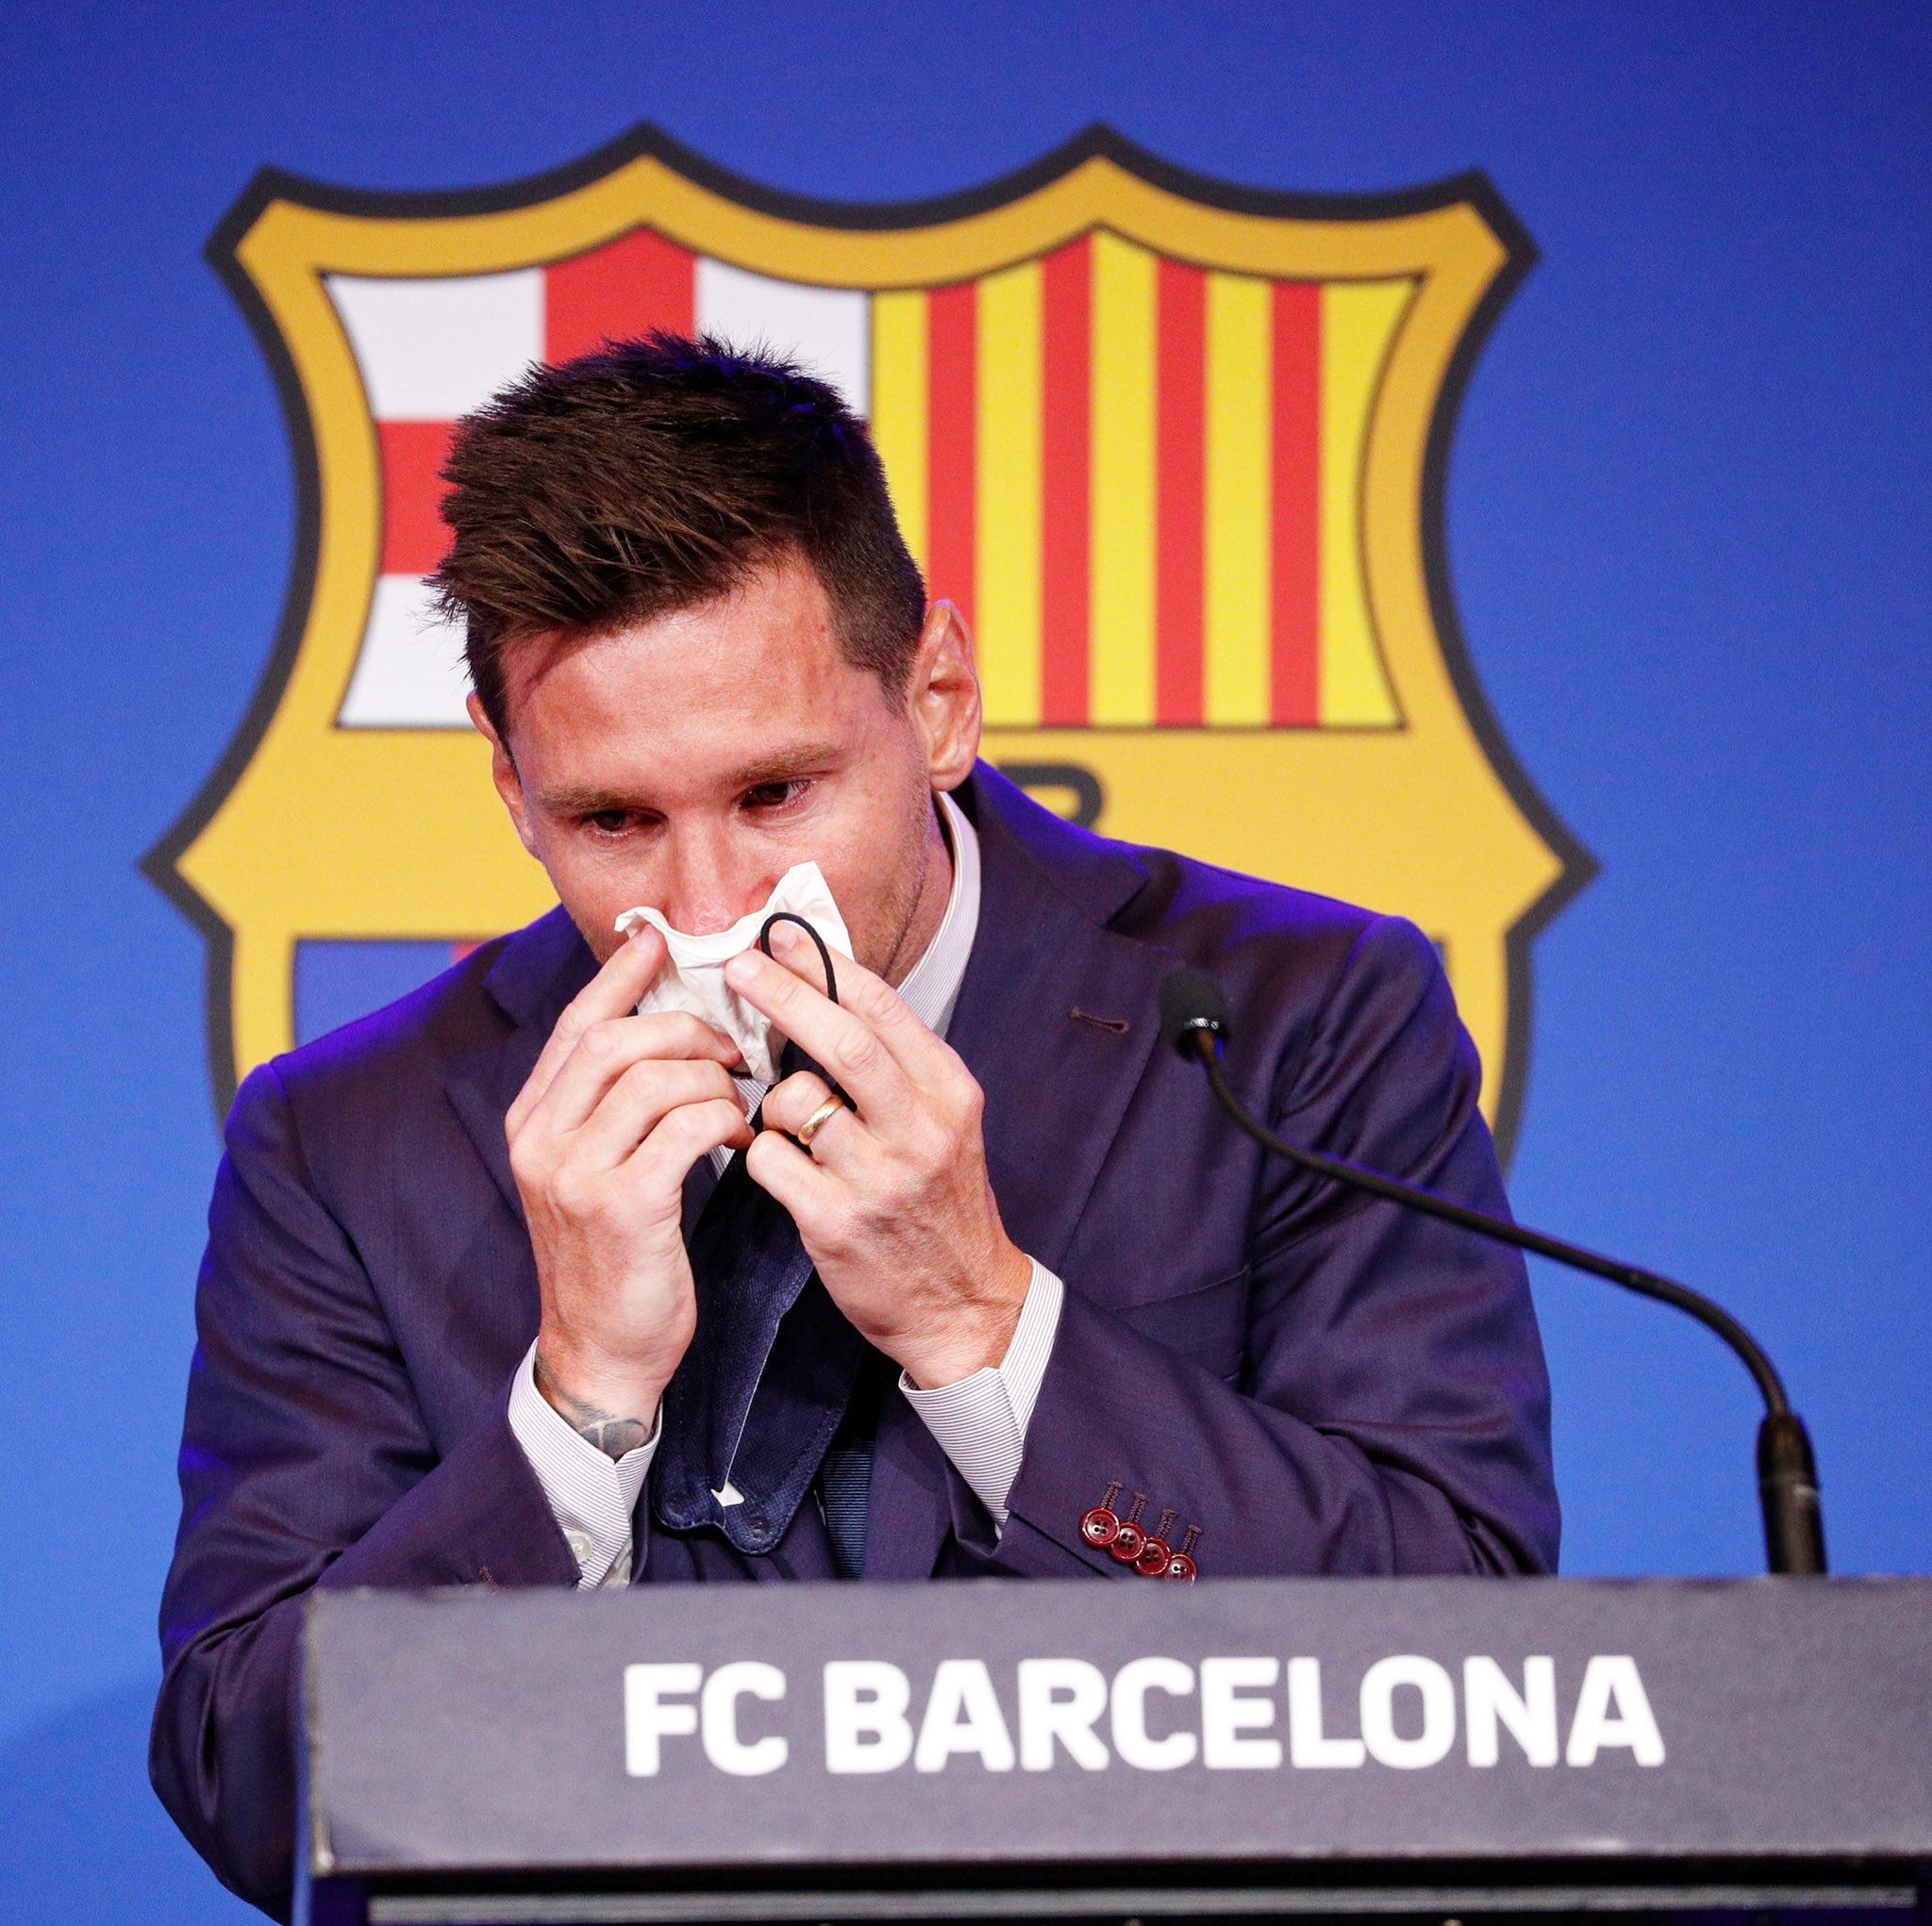 Messi leaved Barcelona